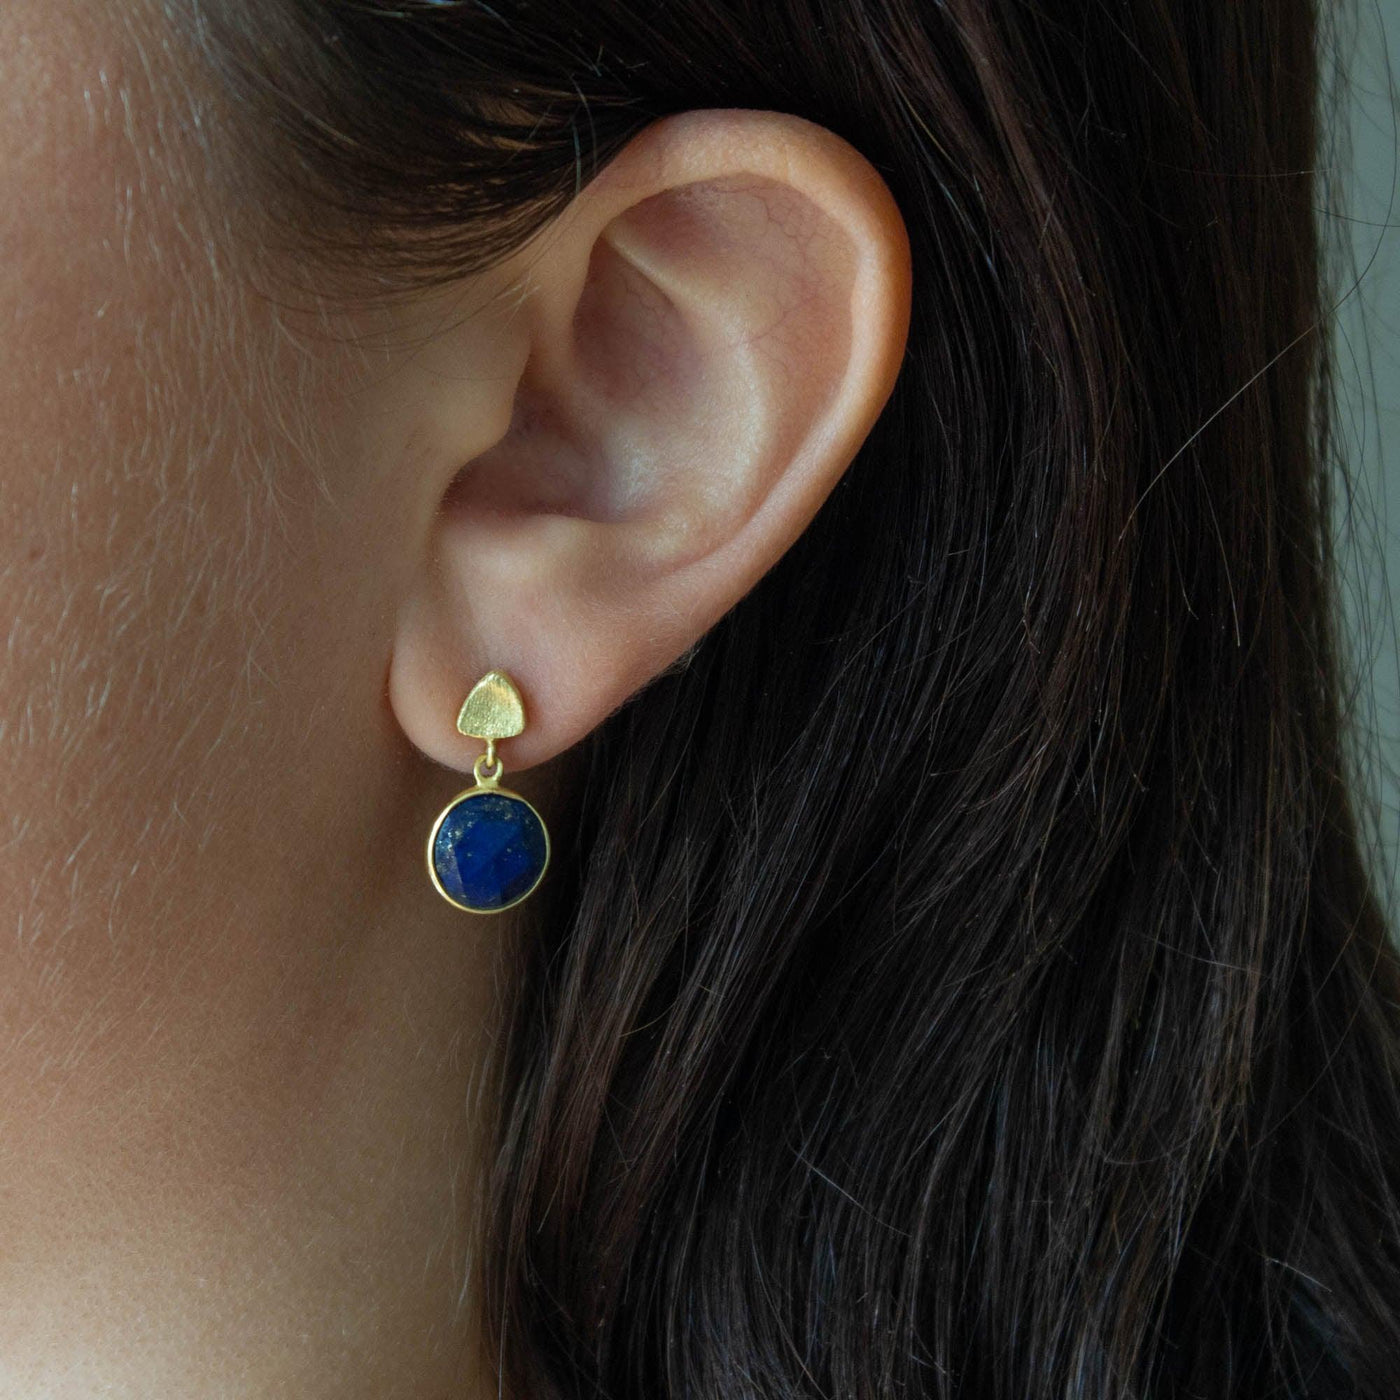 Brushed Gold Round Lapis Lazuli Stud Drop Earrings - Rococo Jewellery